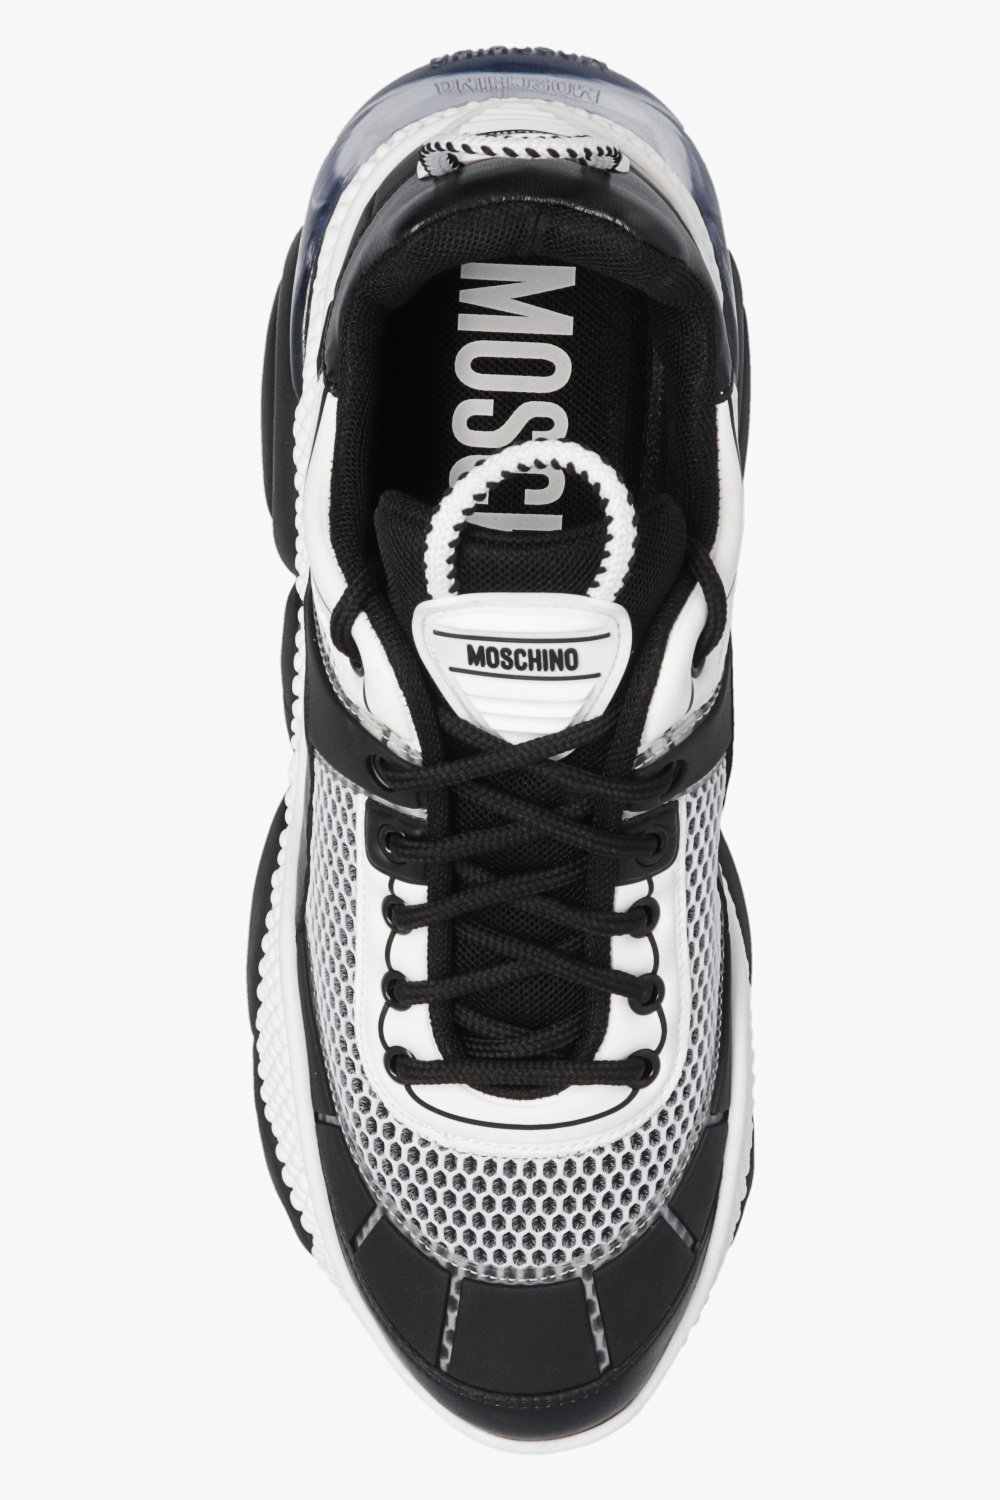 Moschino Puma enzo 2 black blue white men running sports shoes sneakers 193249-25